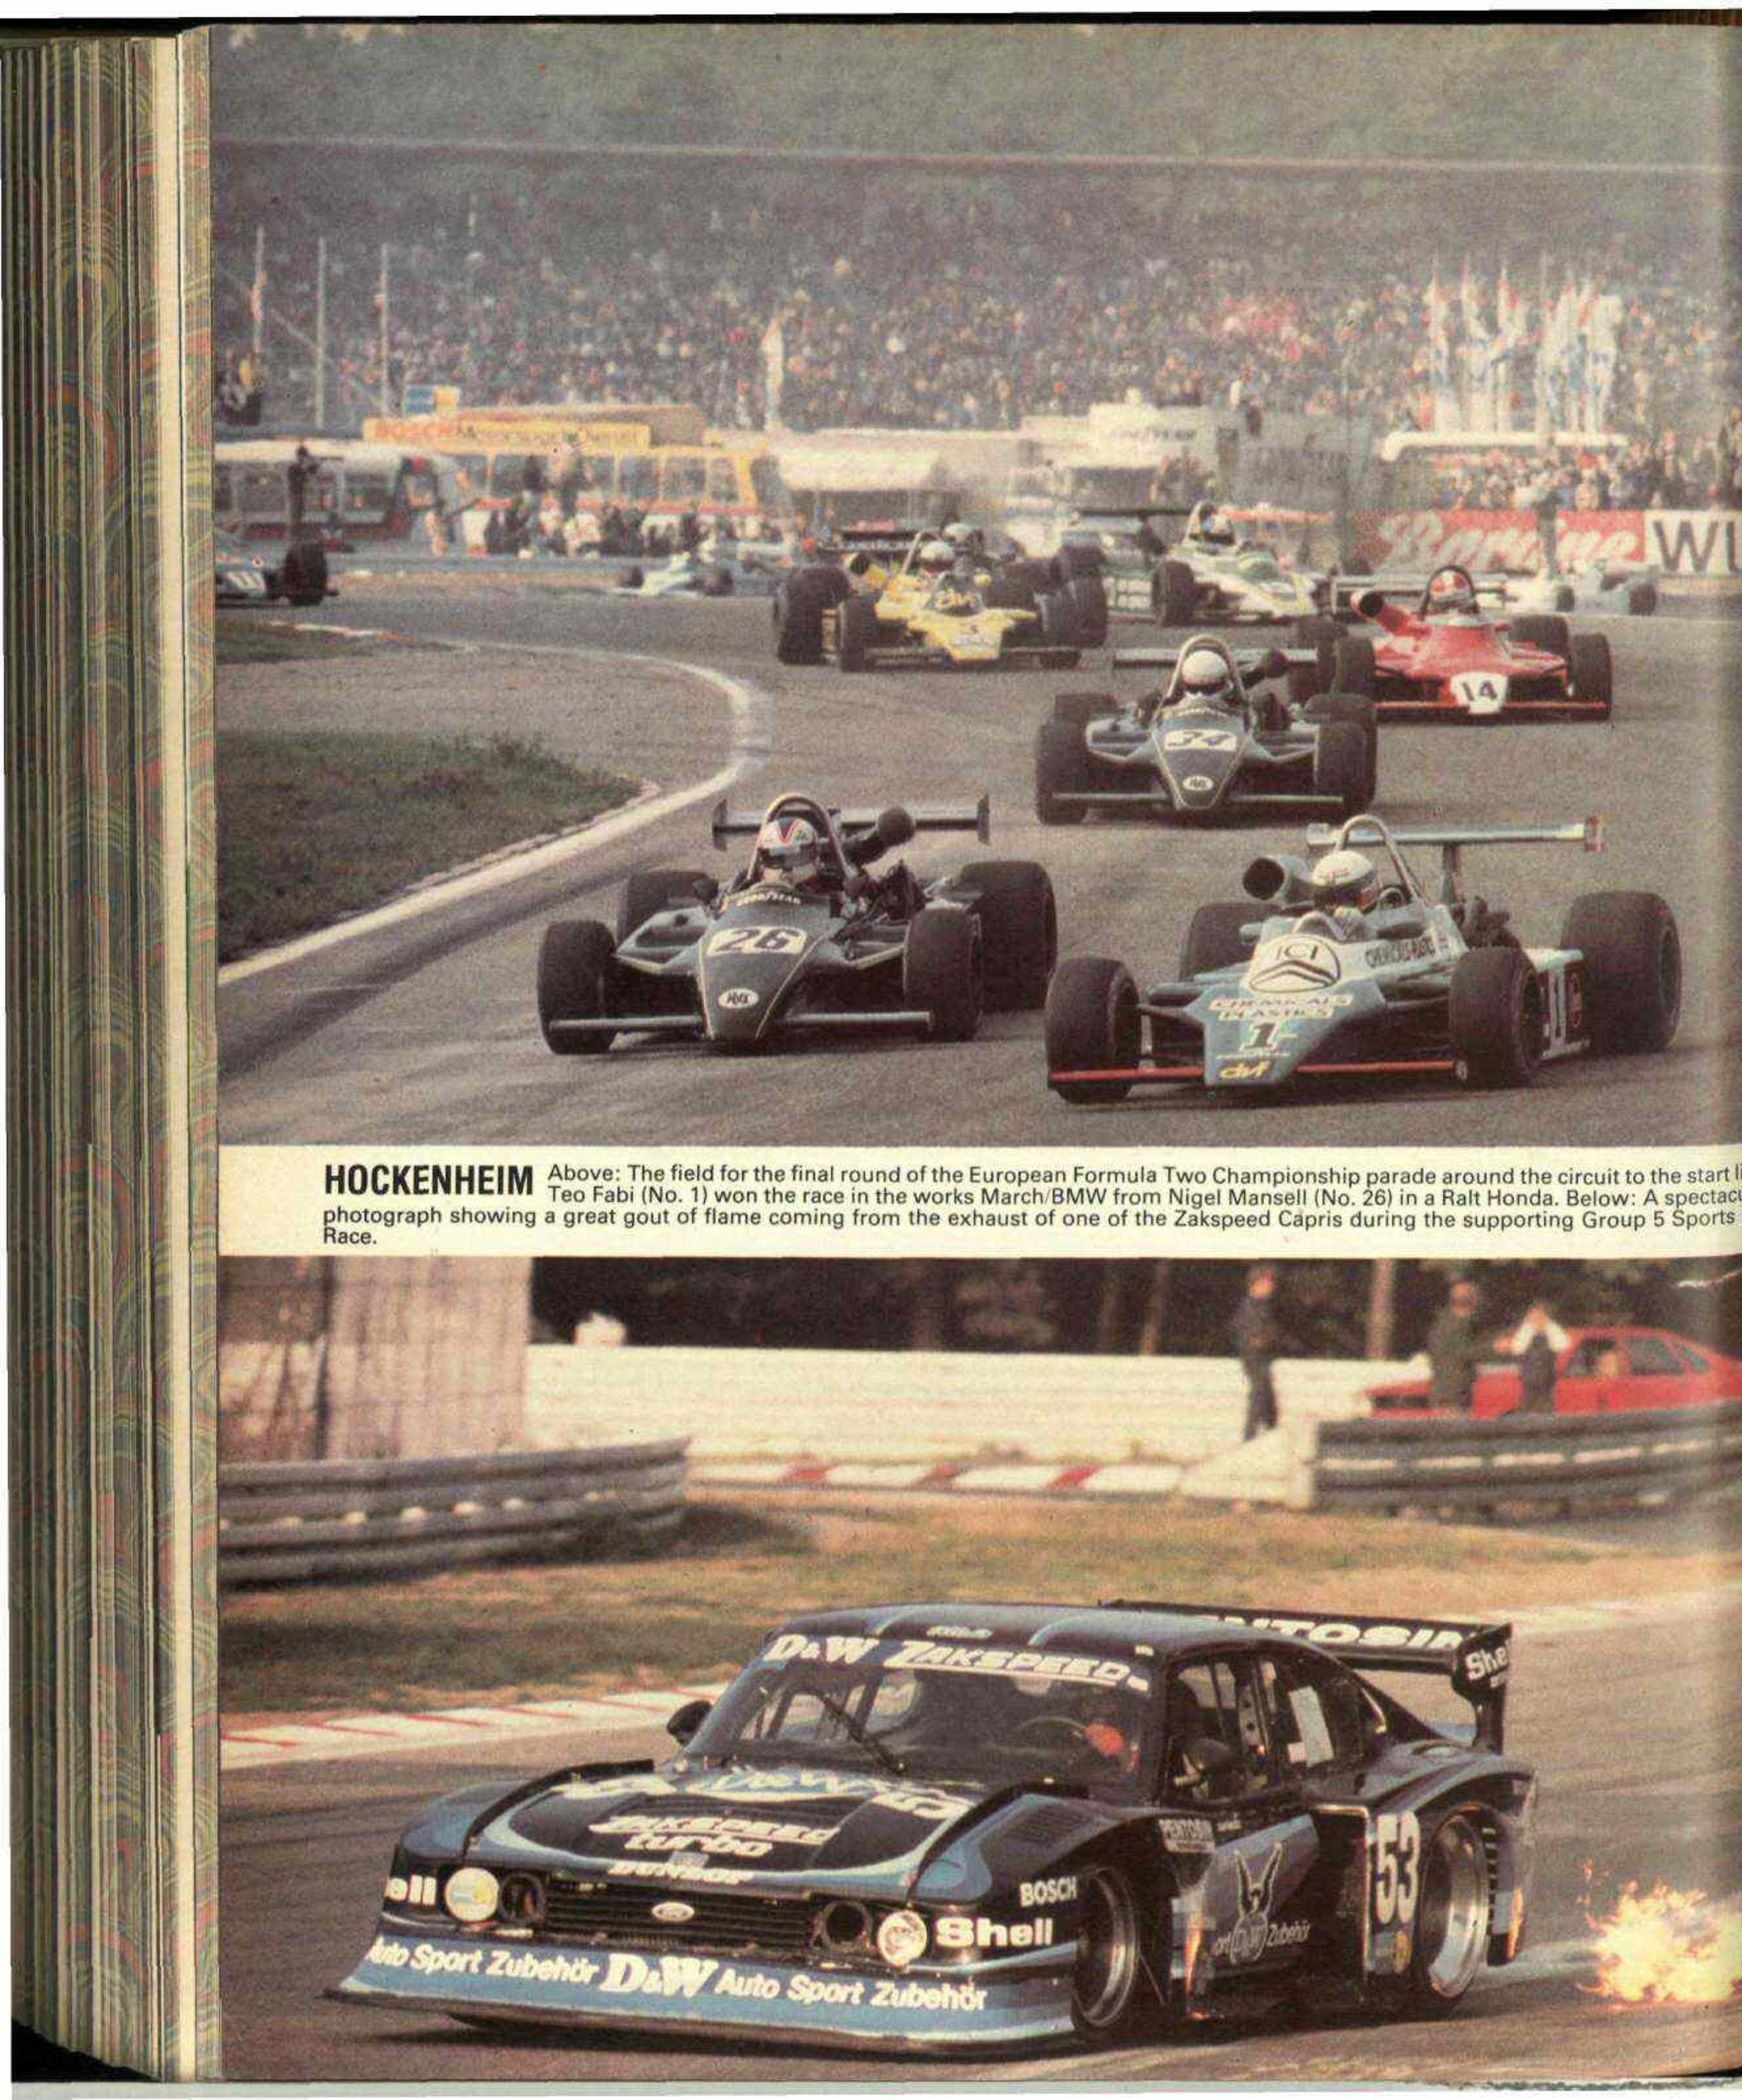 United States Grand Prix East race report November 1980 - Motor 